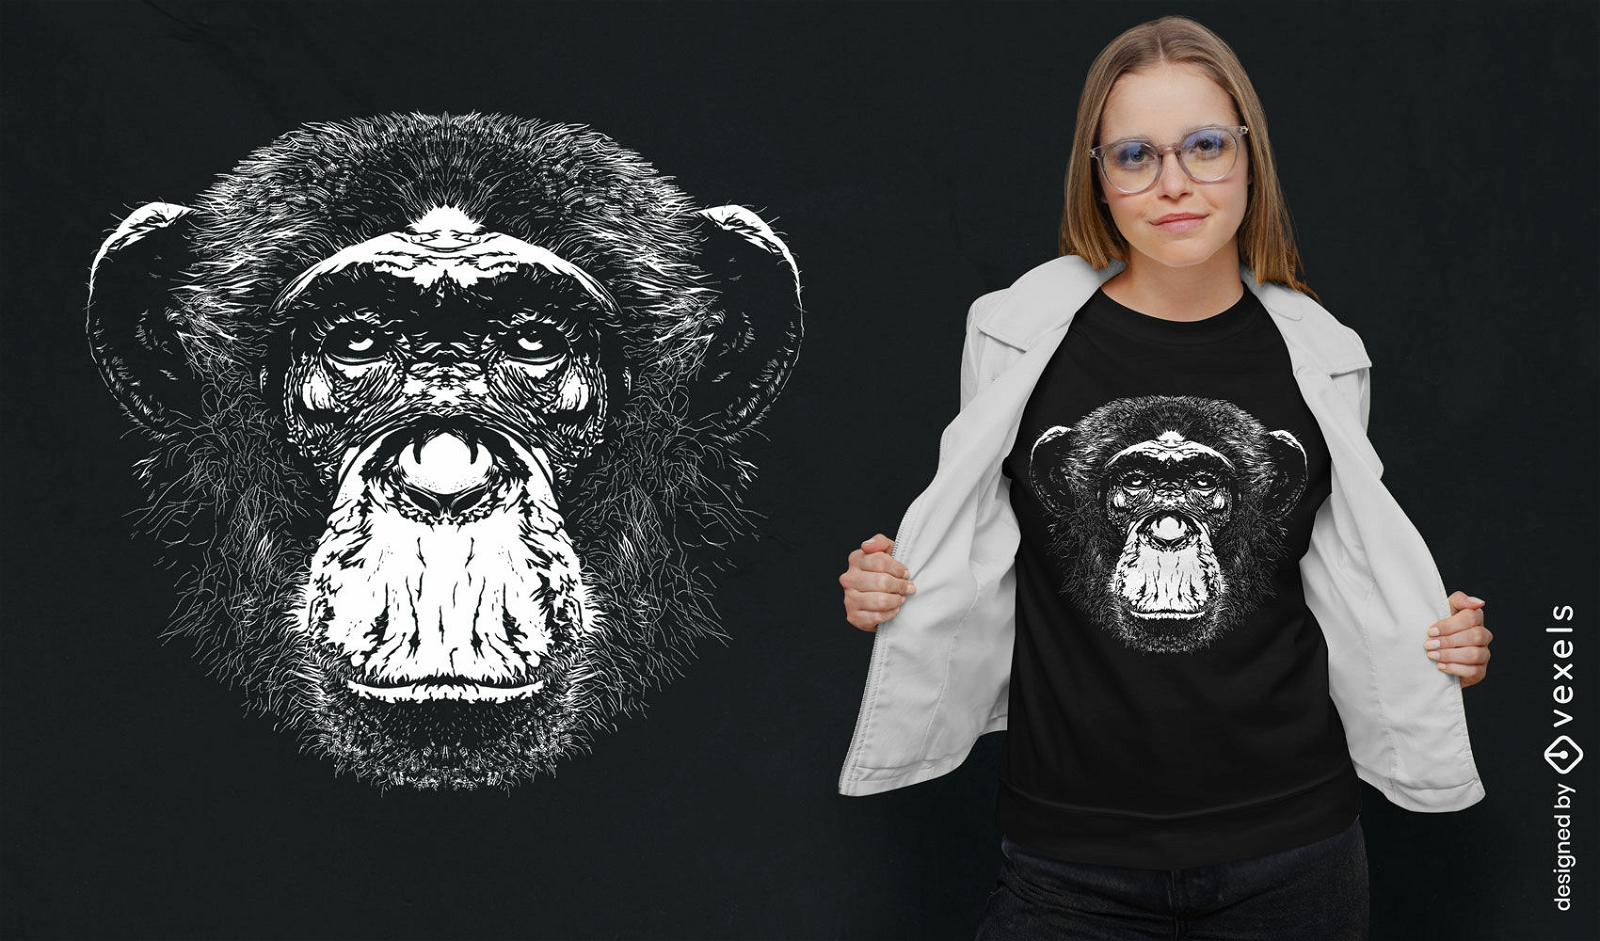 Realistic monkey head t-shirt design